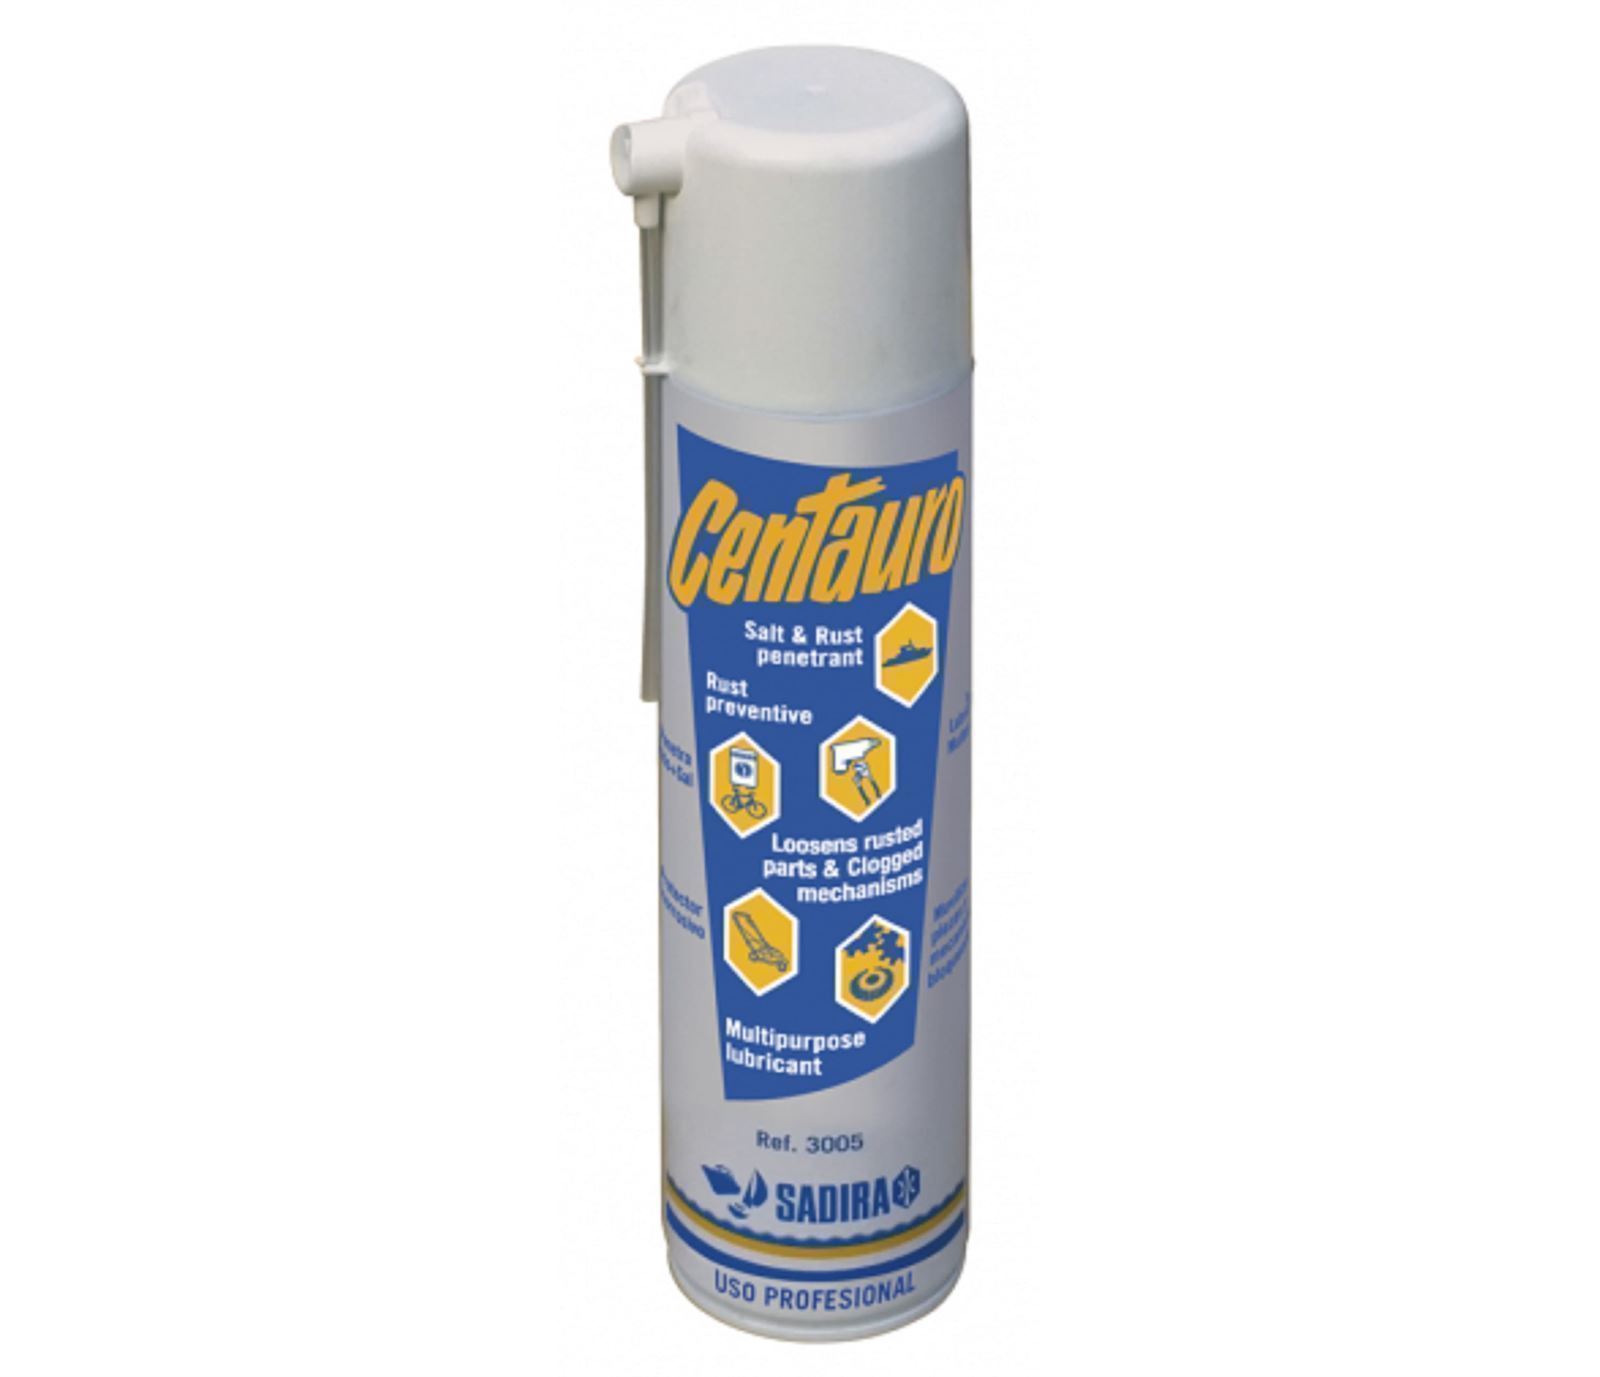 Spray Lubricante Multiusos SADIRA Centauro - Imagen 1